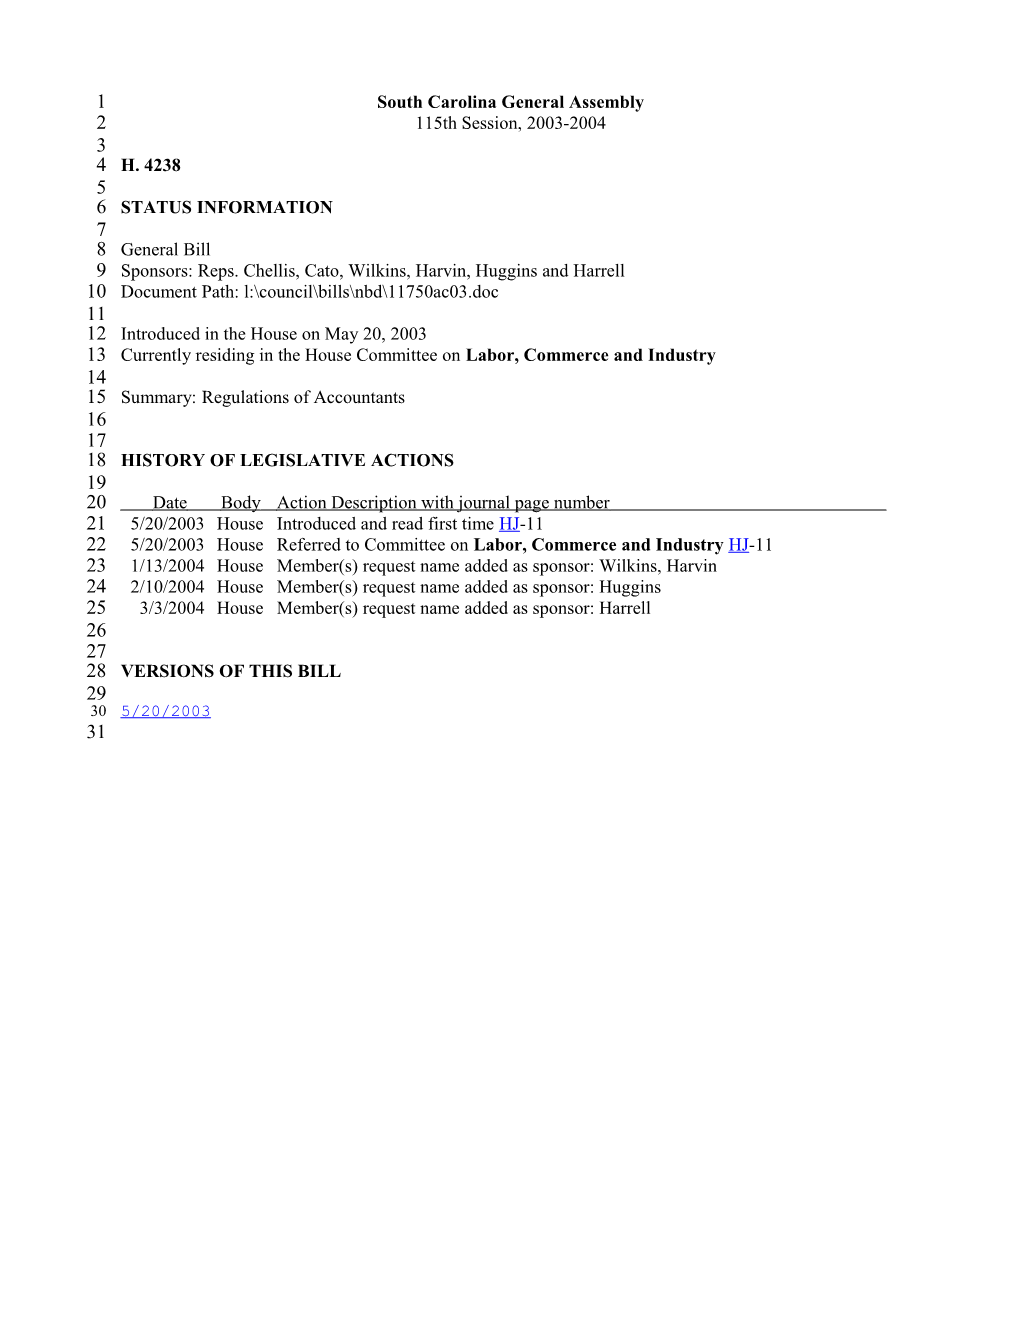 2003-2004 Bill 4238: Regulations of Accountants - South Carolina Legislature Online